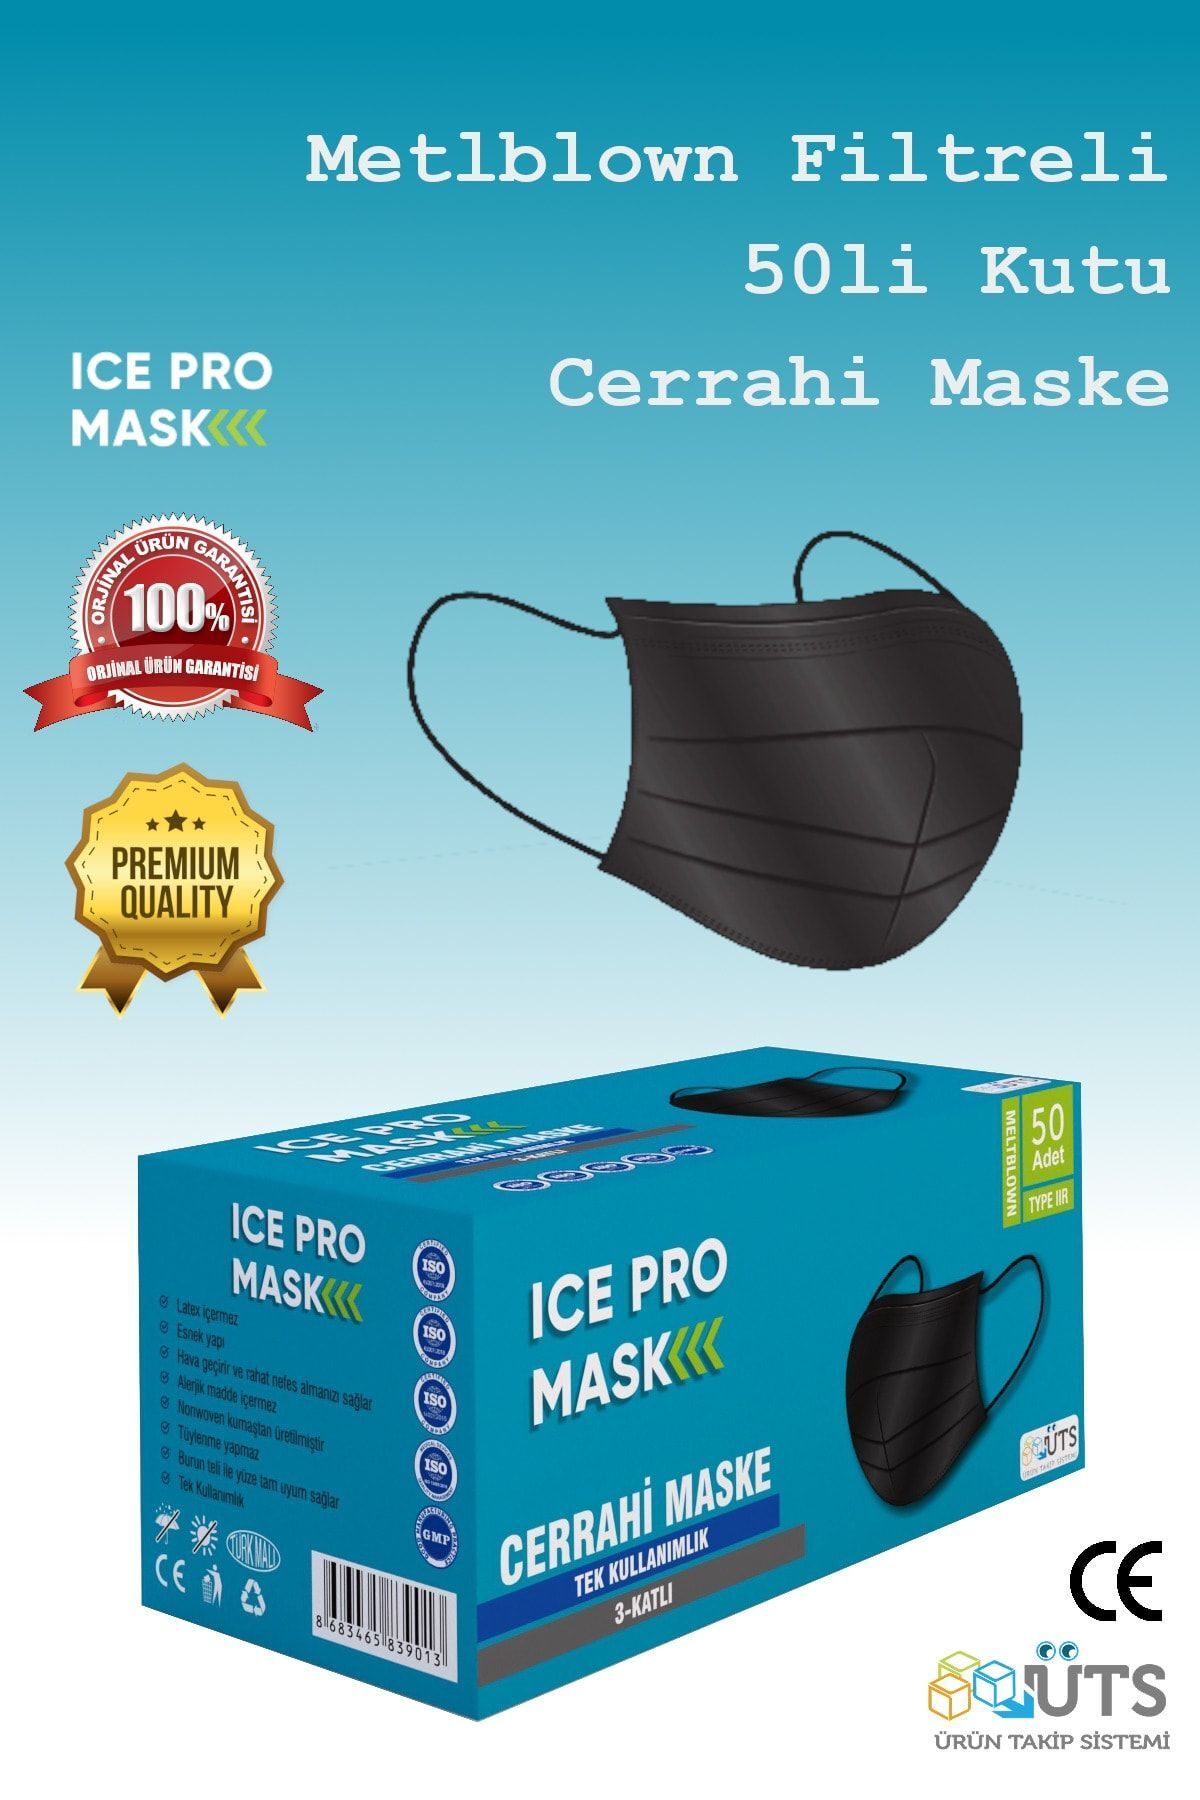 icepro mask Icepro Siyah Cerrahi Maske - Meltblown Filtreli - Burun Telli - 50li Kutu (üts Kayıtlı)